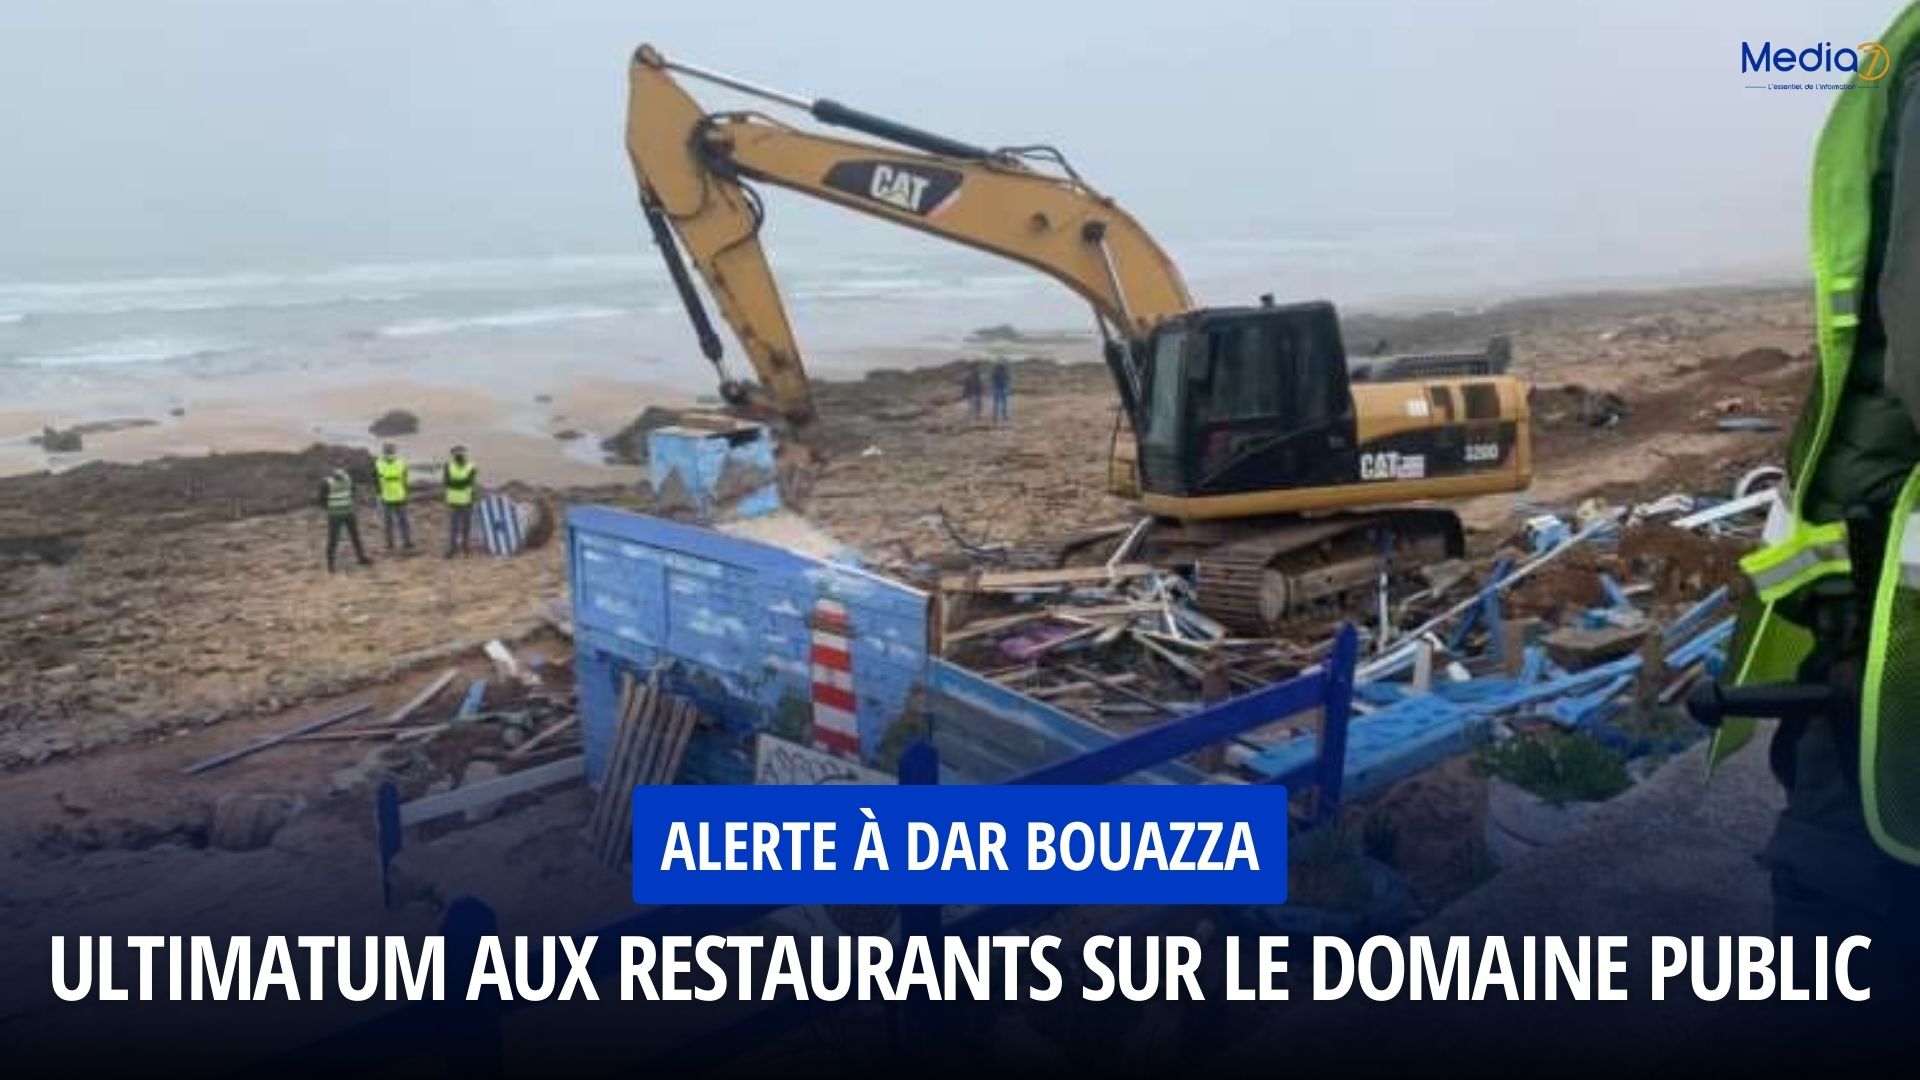 Alert in Dar Bouazza: Ultimatum to Restaurants on Public Domain